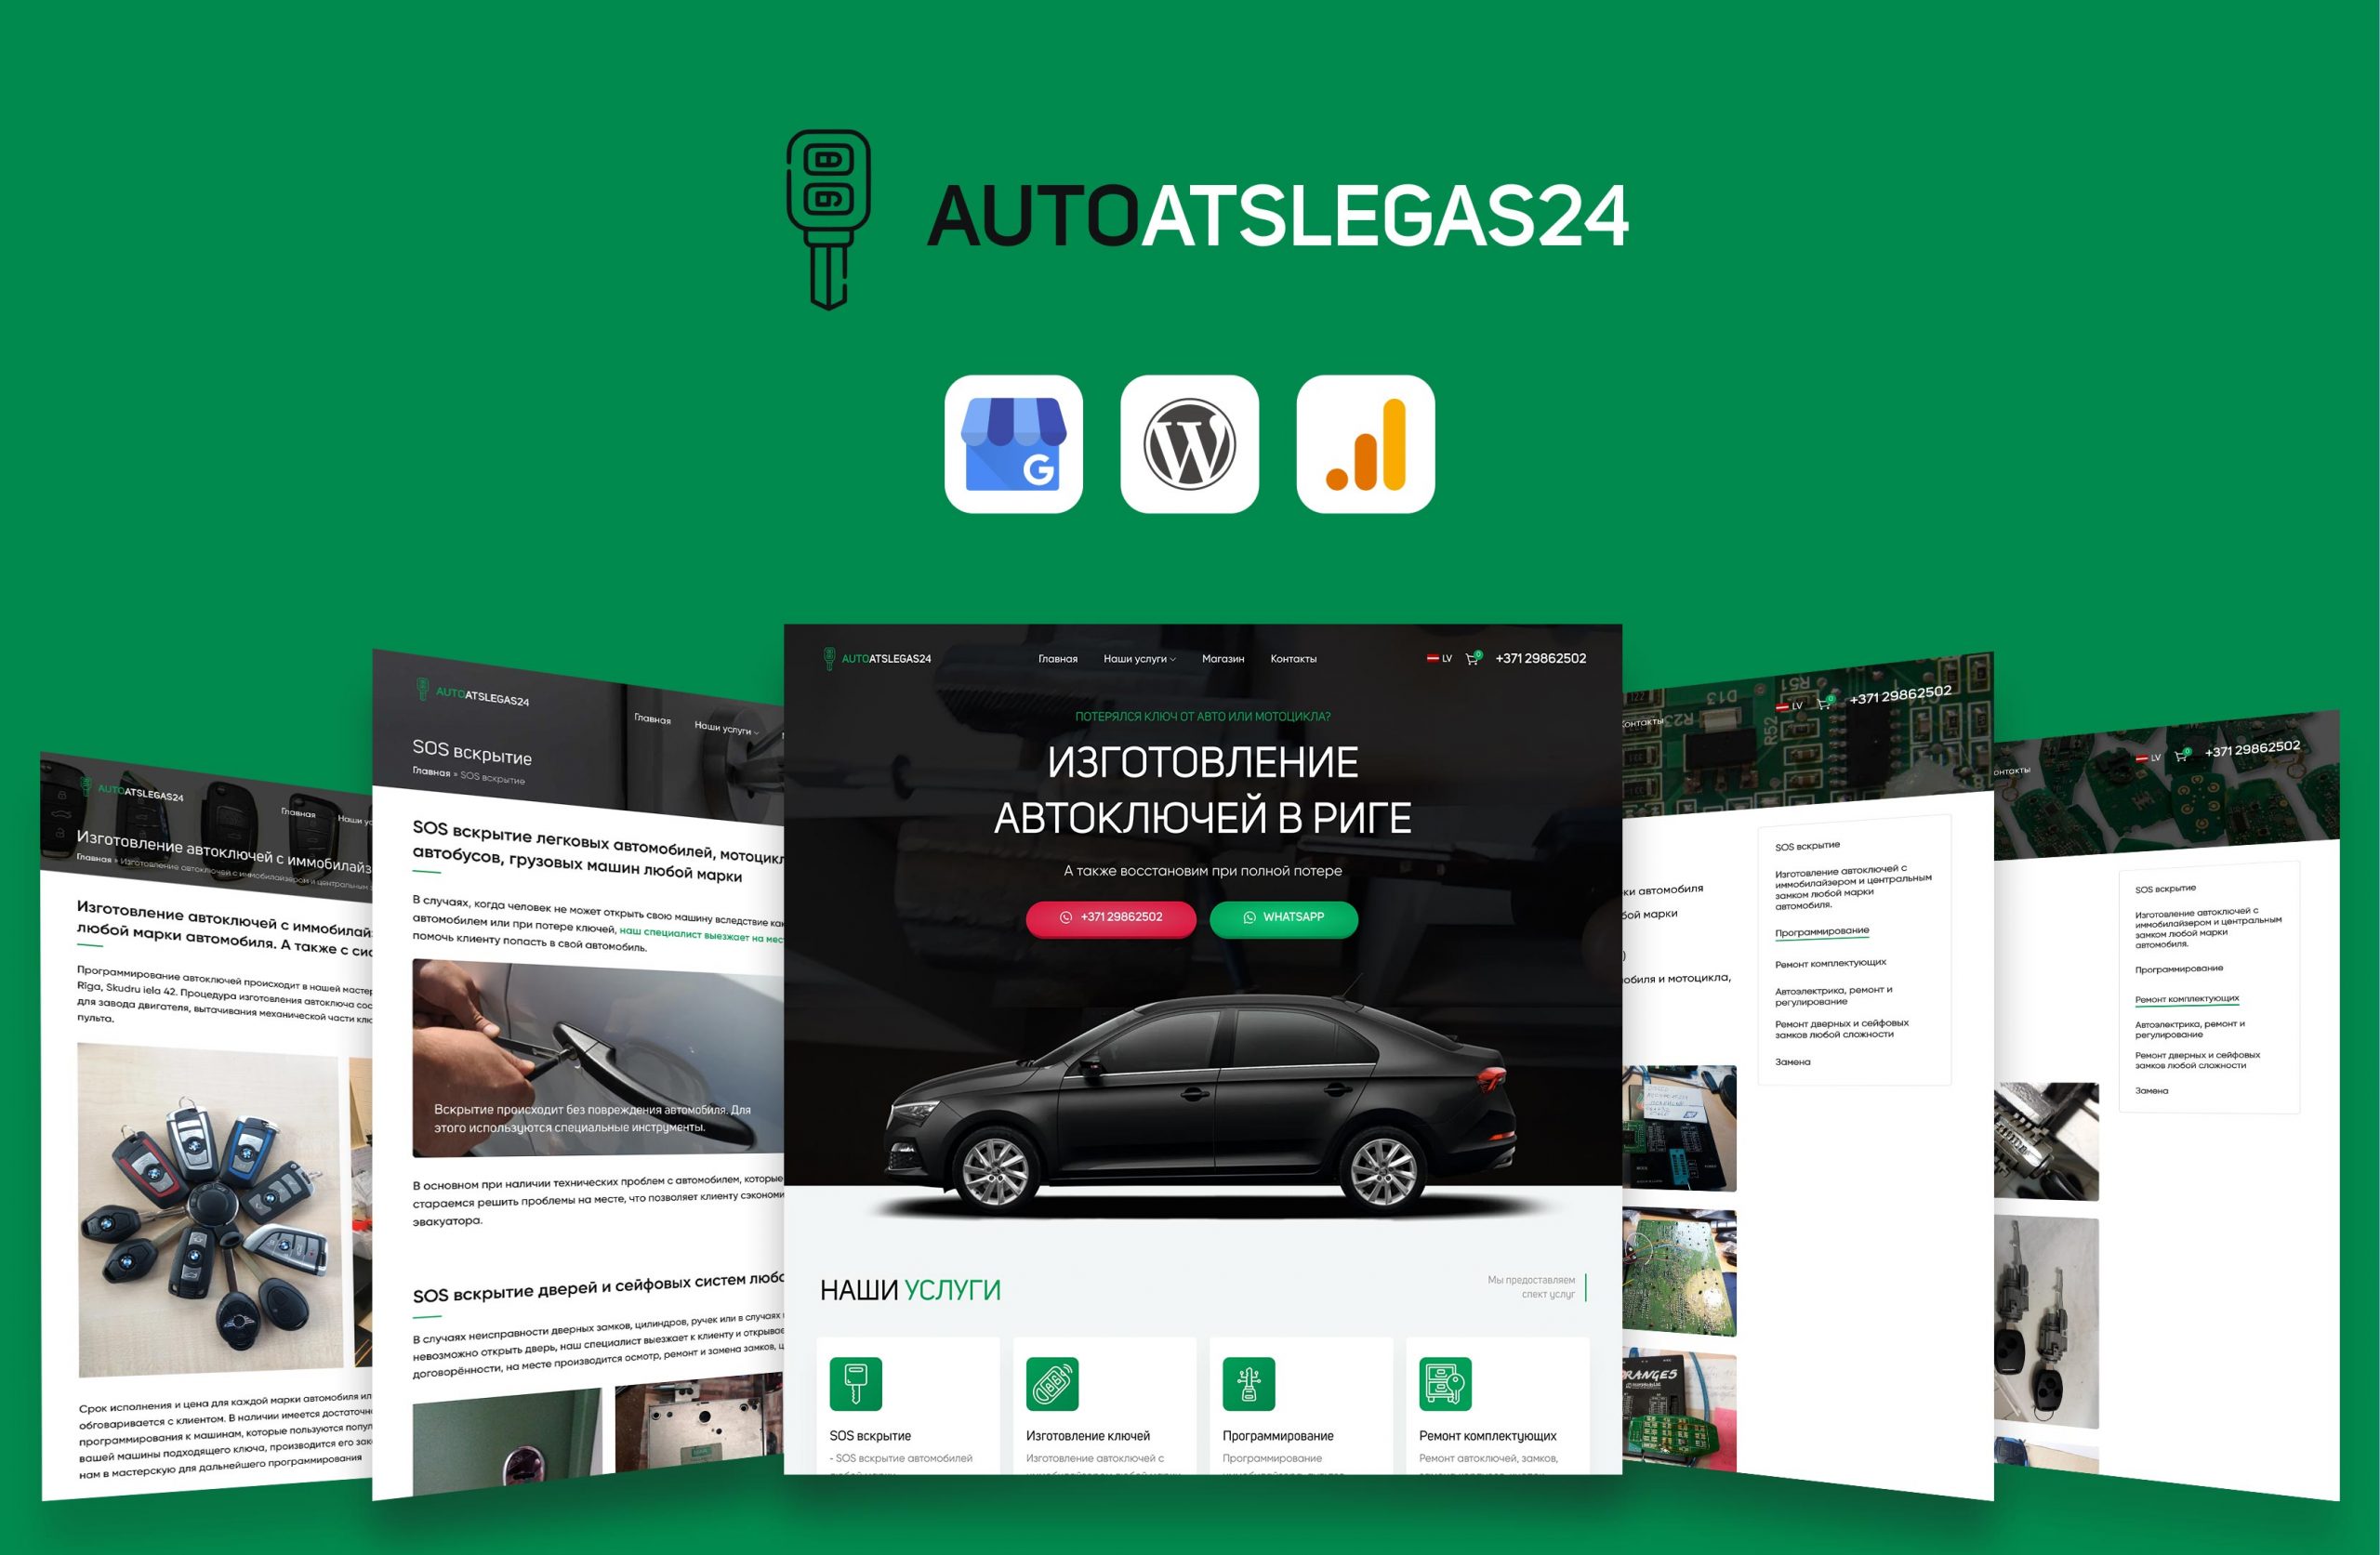 Car keys AutoAtslegas24 Website by Mediafy